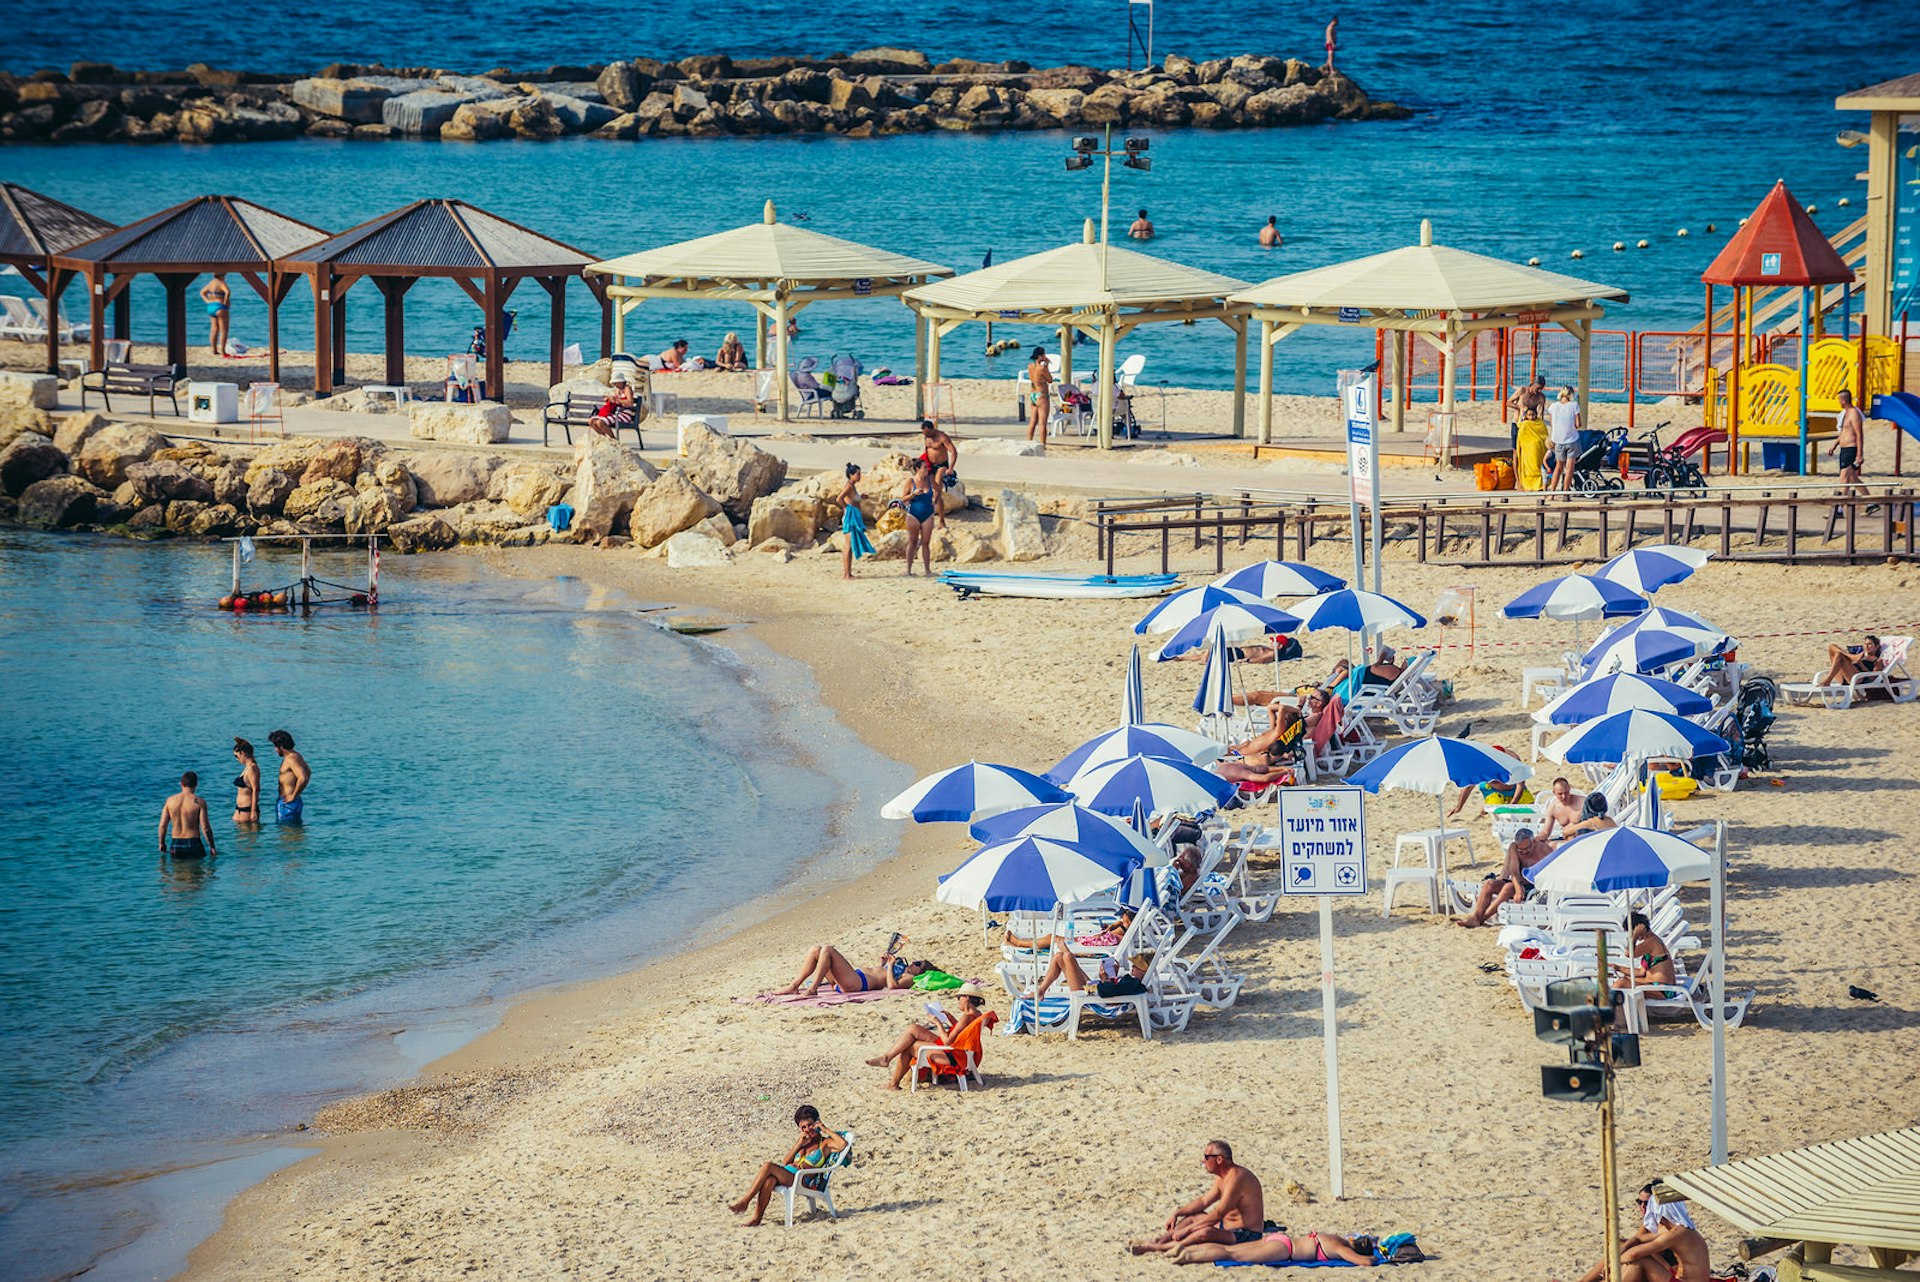 Sunbathers at Hilton Beach, Tel Aviv. Image by Fotokon / Shutterstock